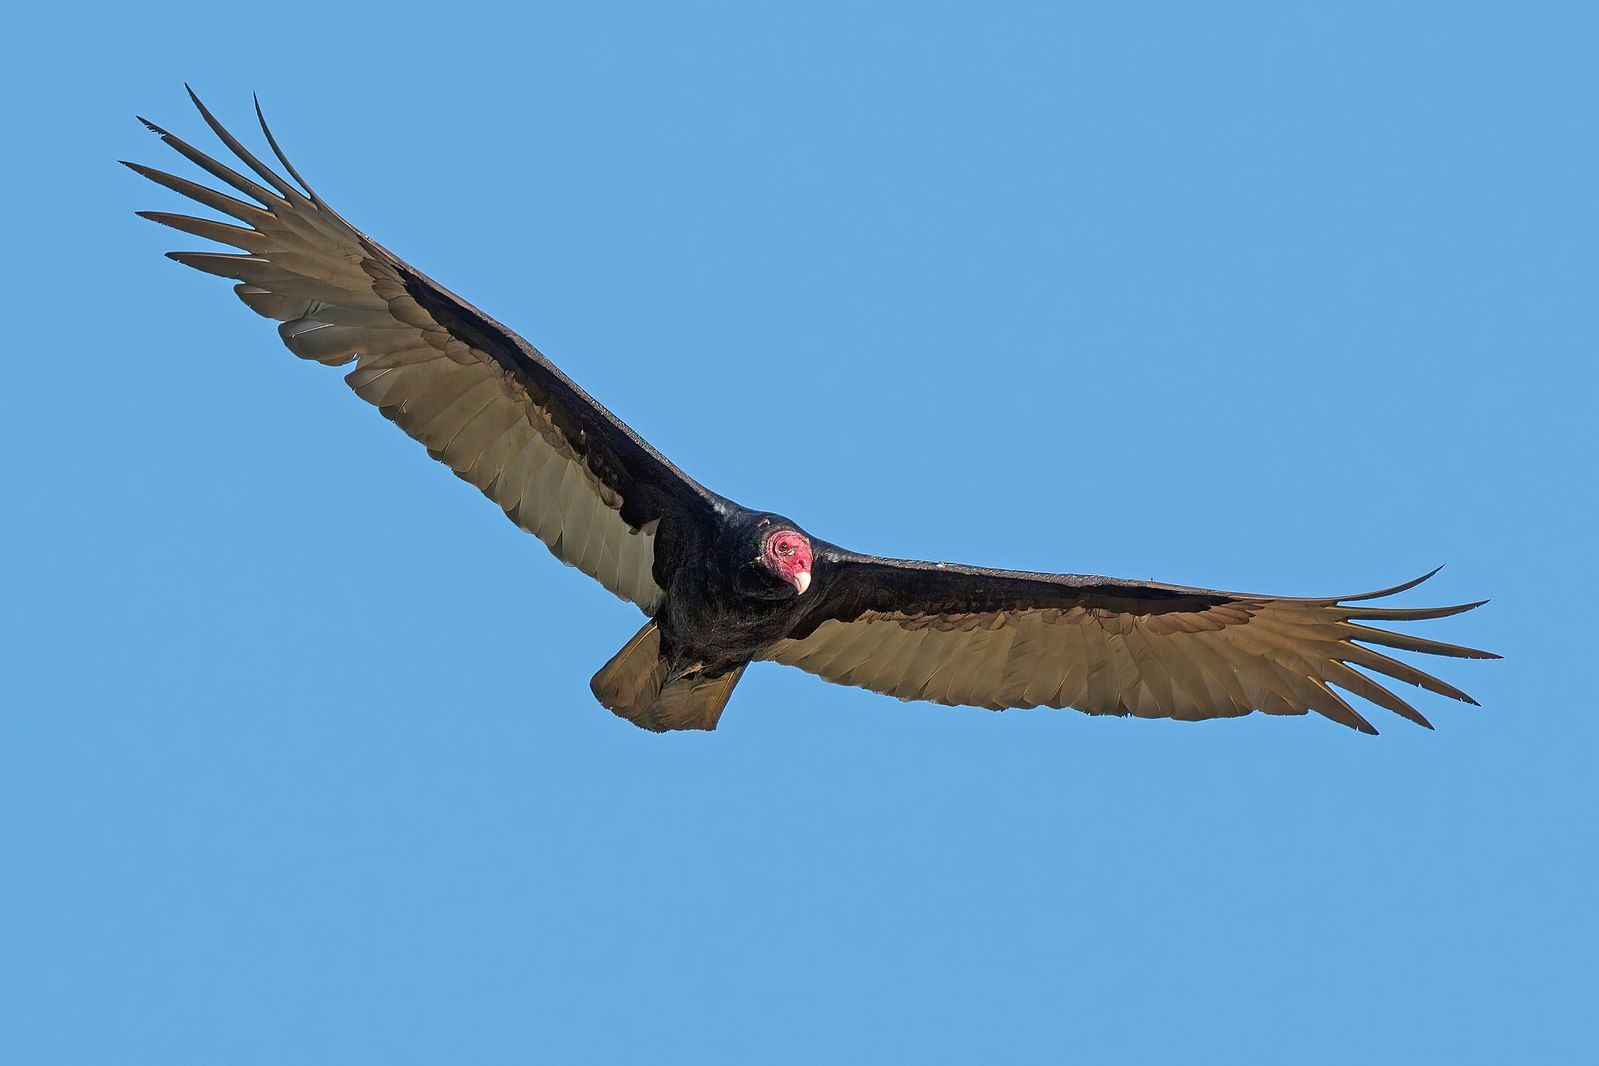 Turkey vulture in flight by Charles J. Sharp, Wikimedia Commons